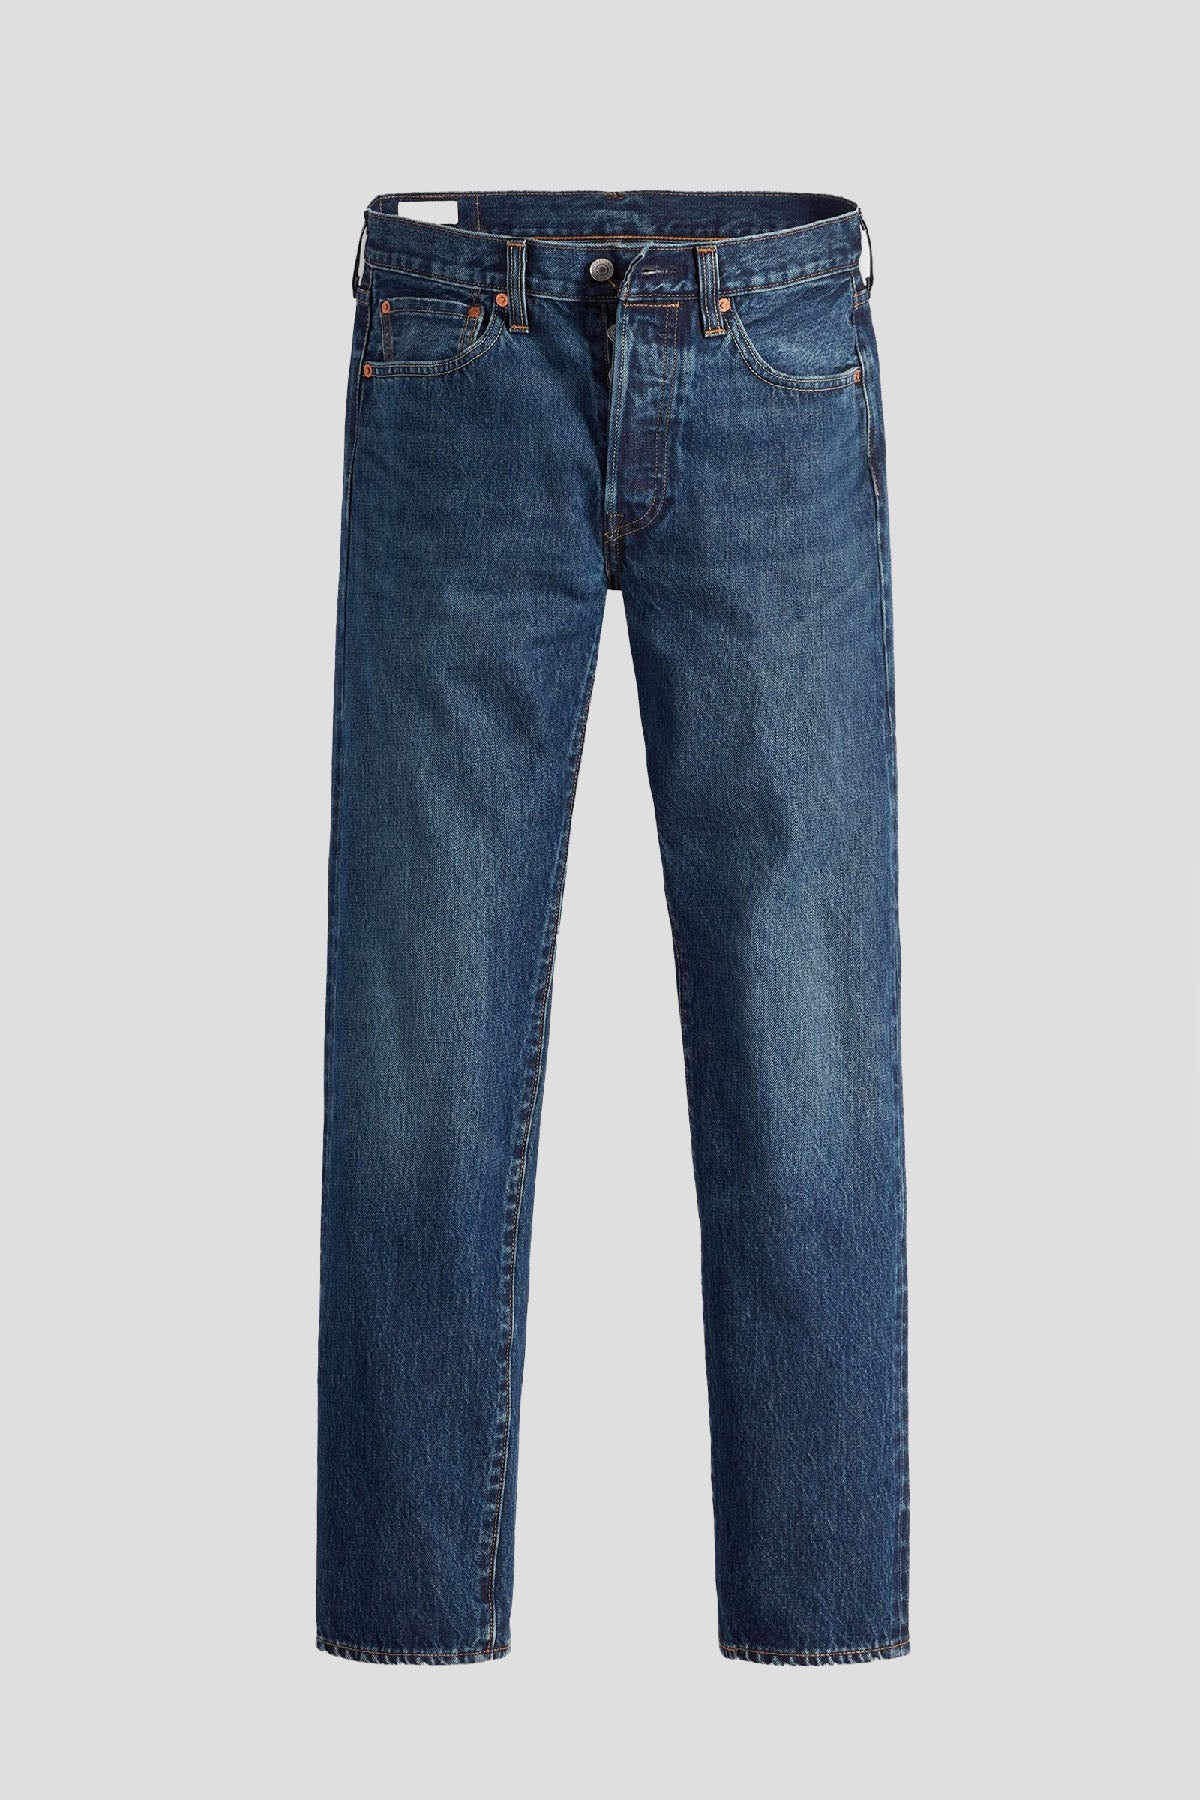 501 Taper Jeans